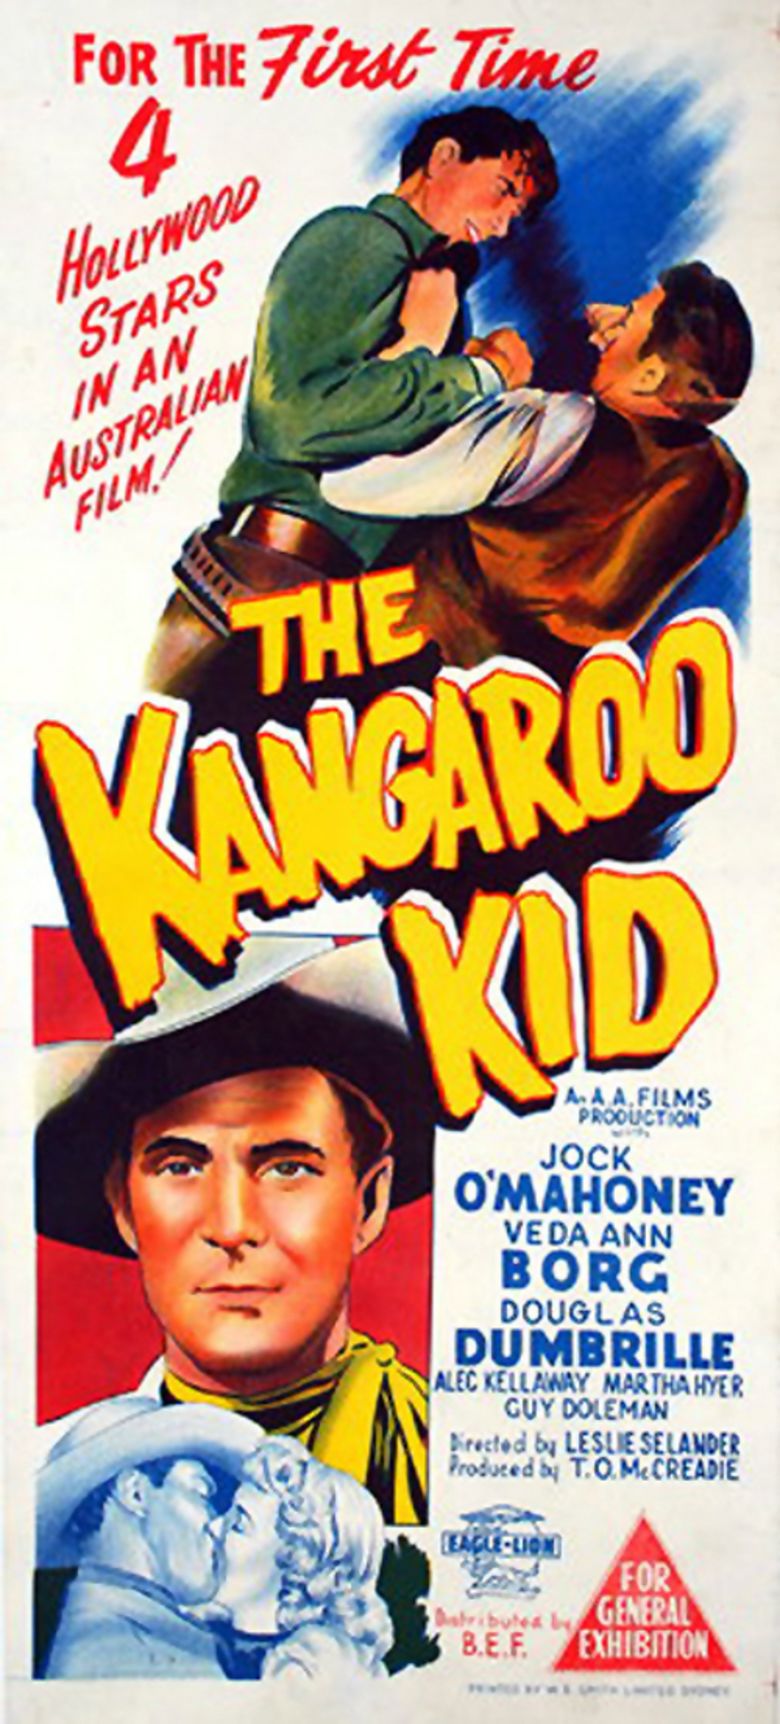 The Kangaroo Kid (film) movie poster